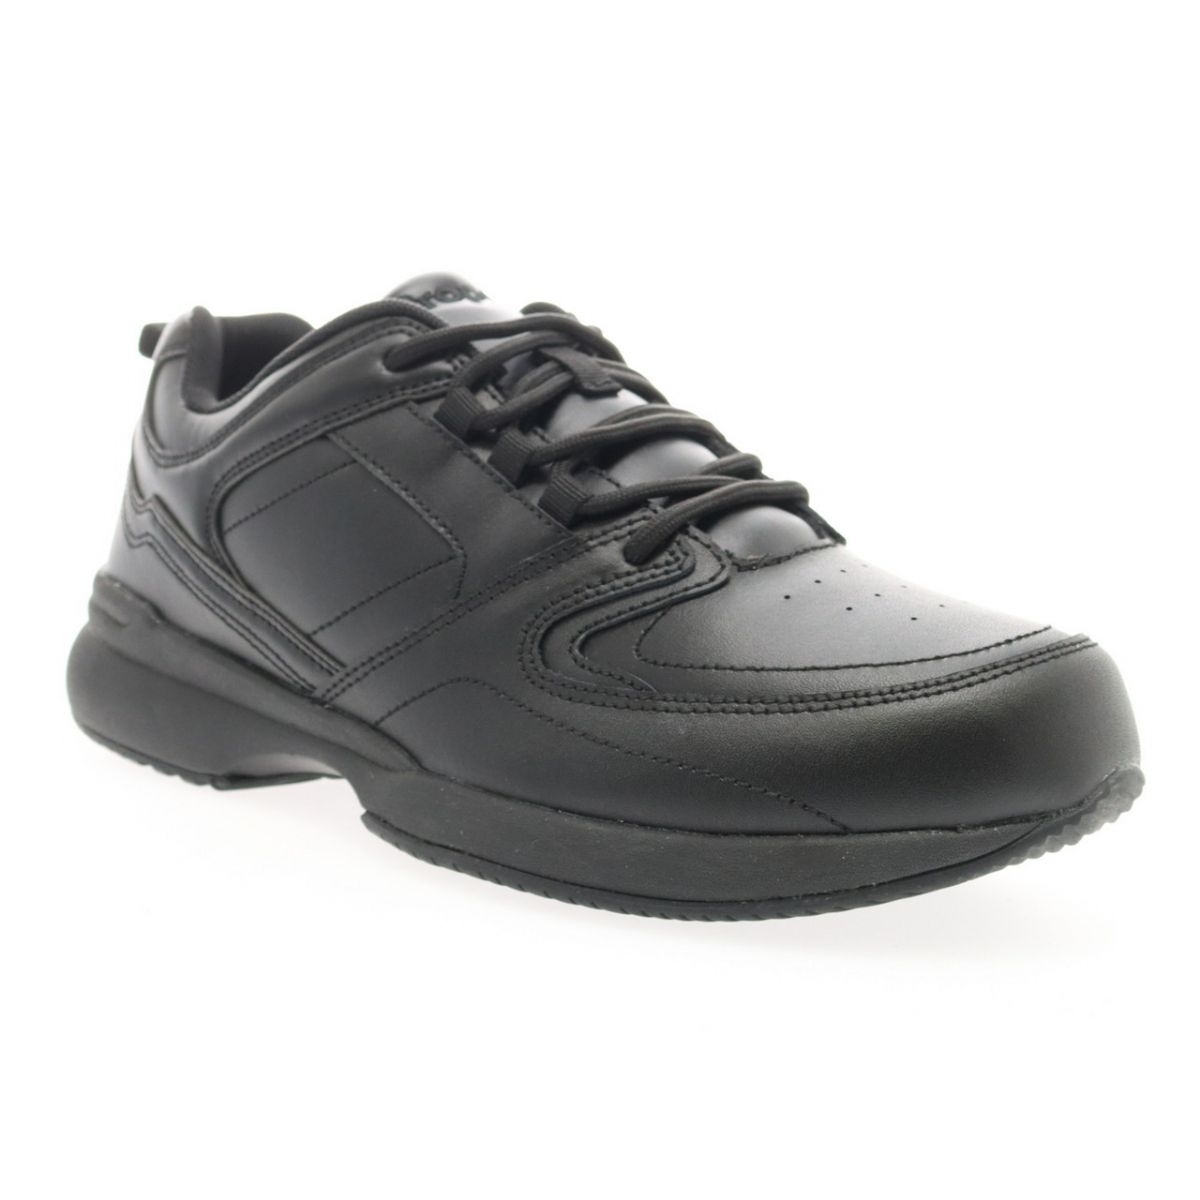 Propet Men's Life Walker Sport Sneaker Black - MAA272LBLK BLACK - BLACK, 9 Wide